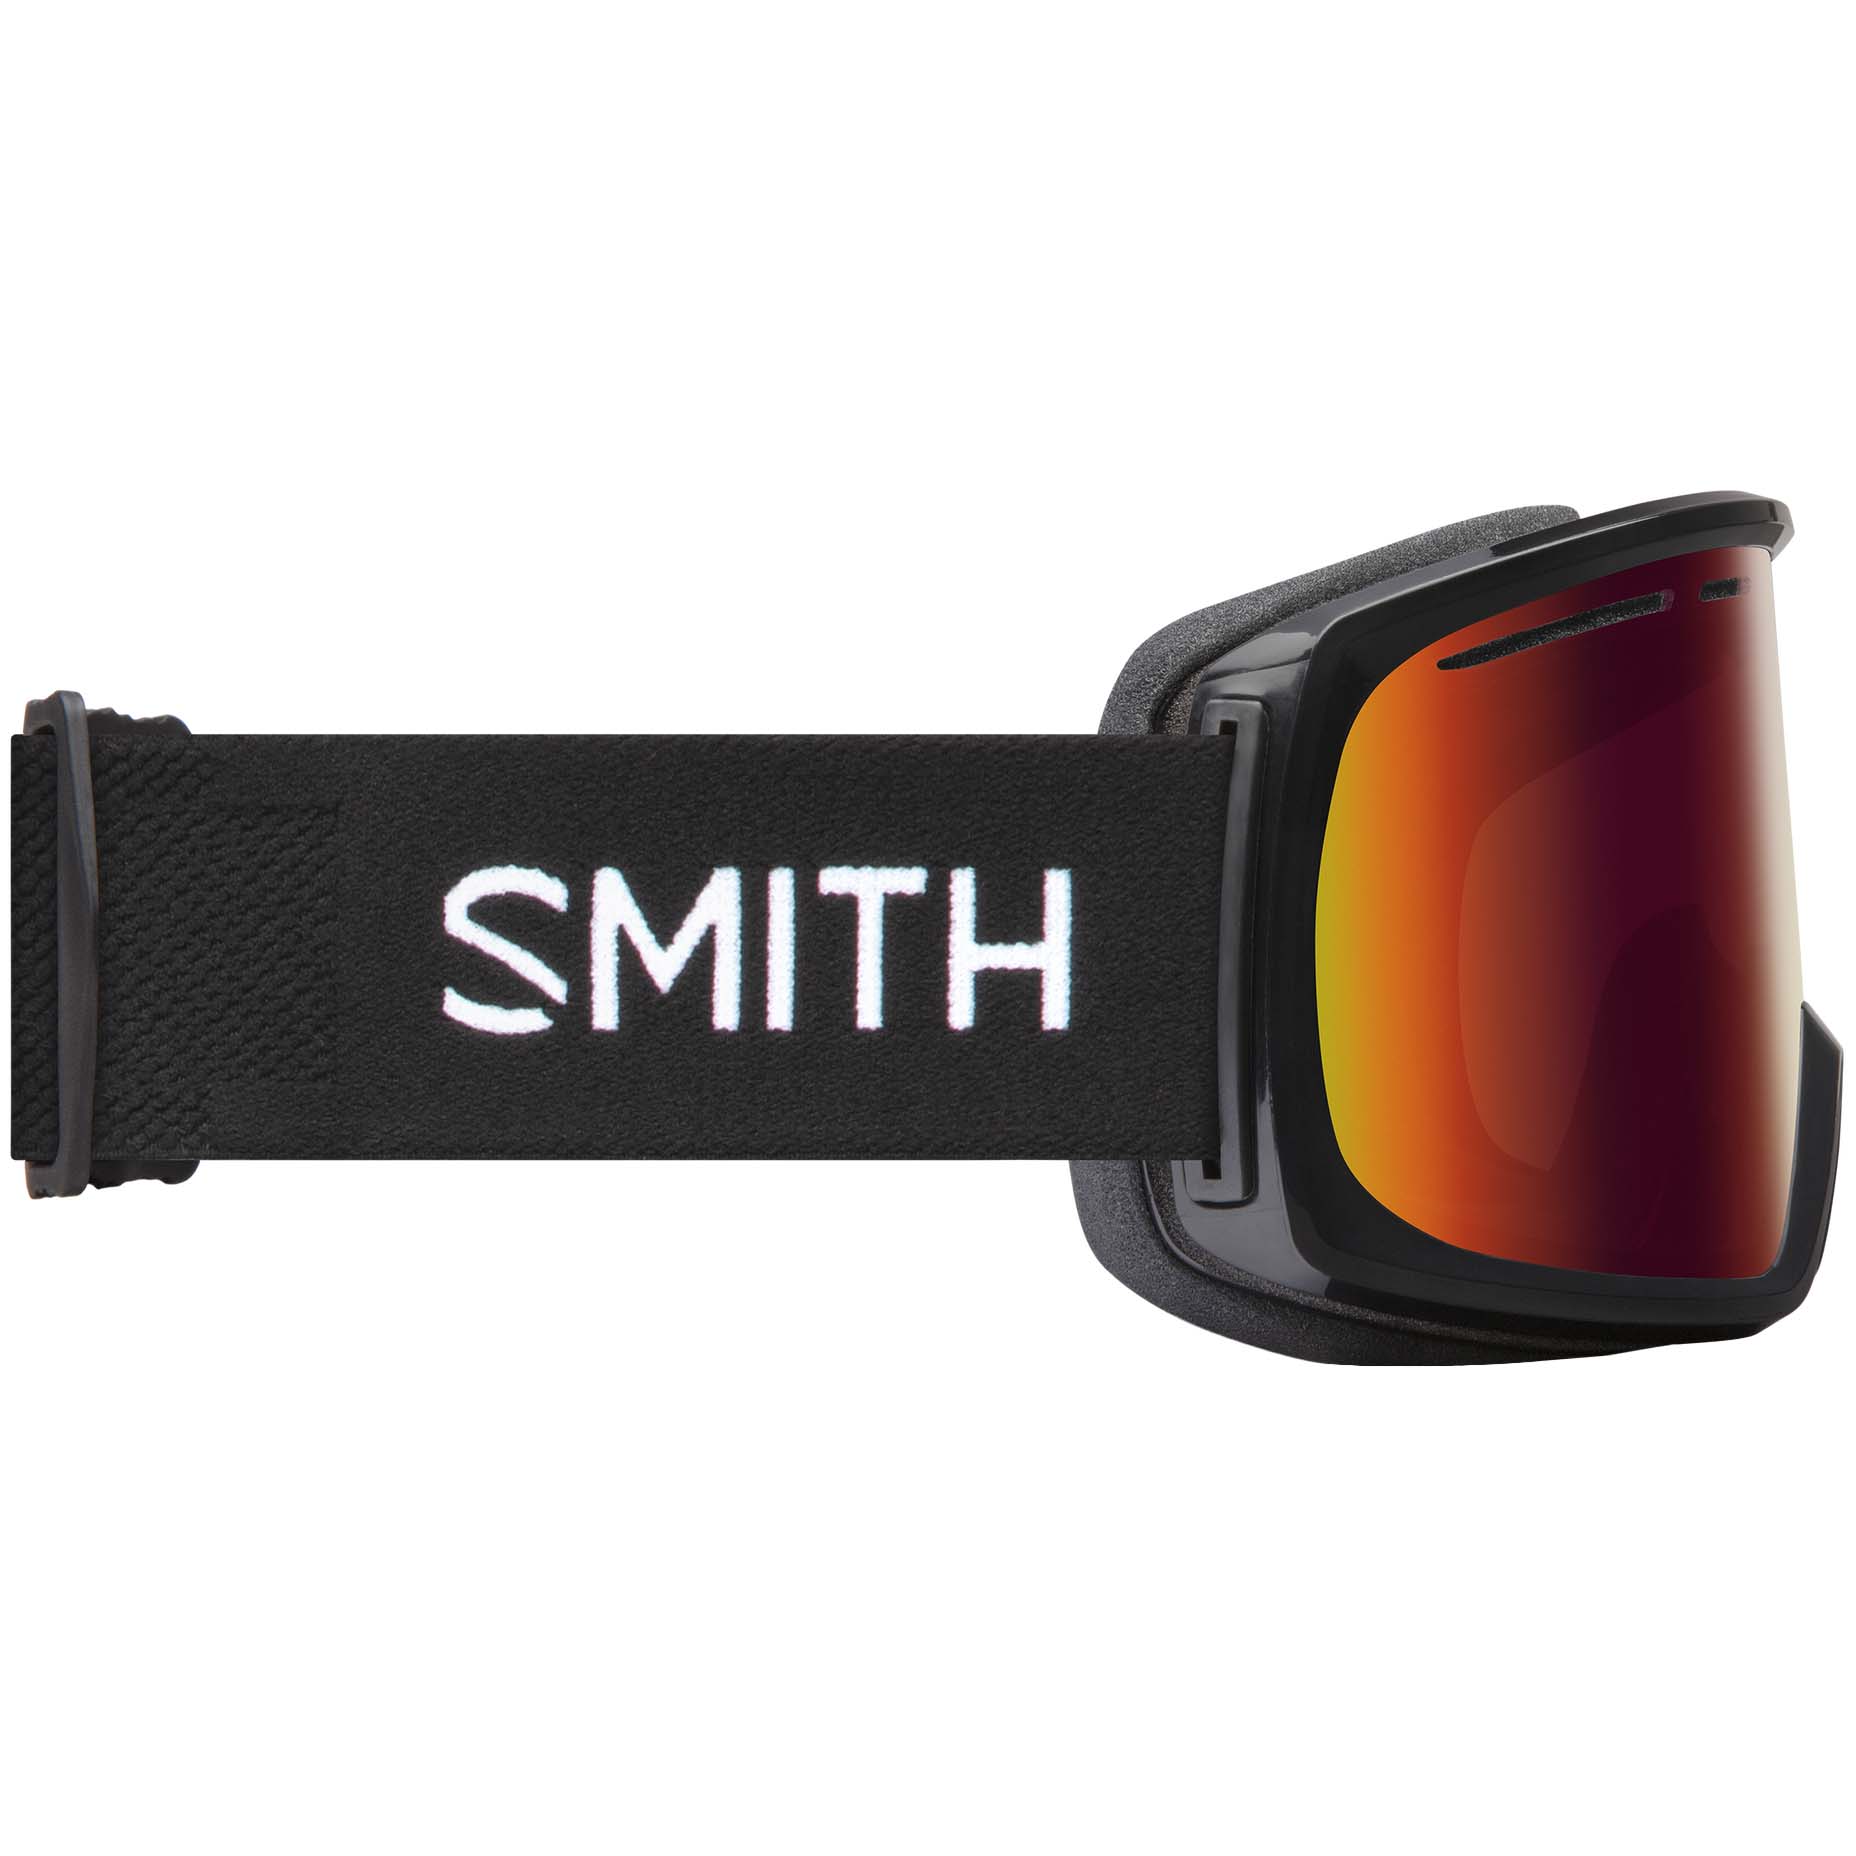 Smith Range Snowboard/Ski Goggles